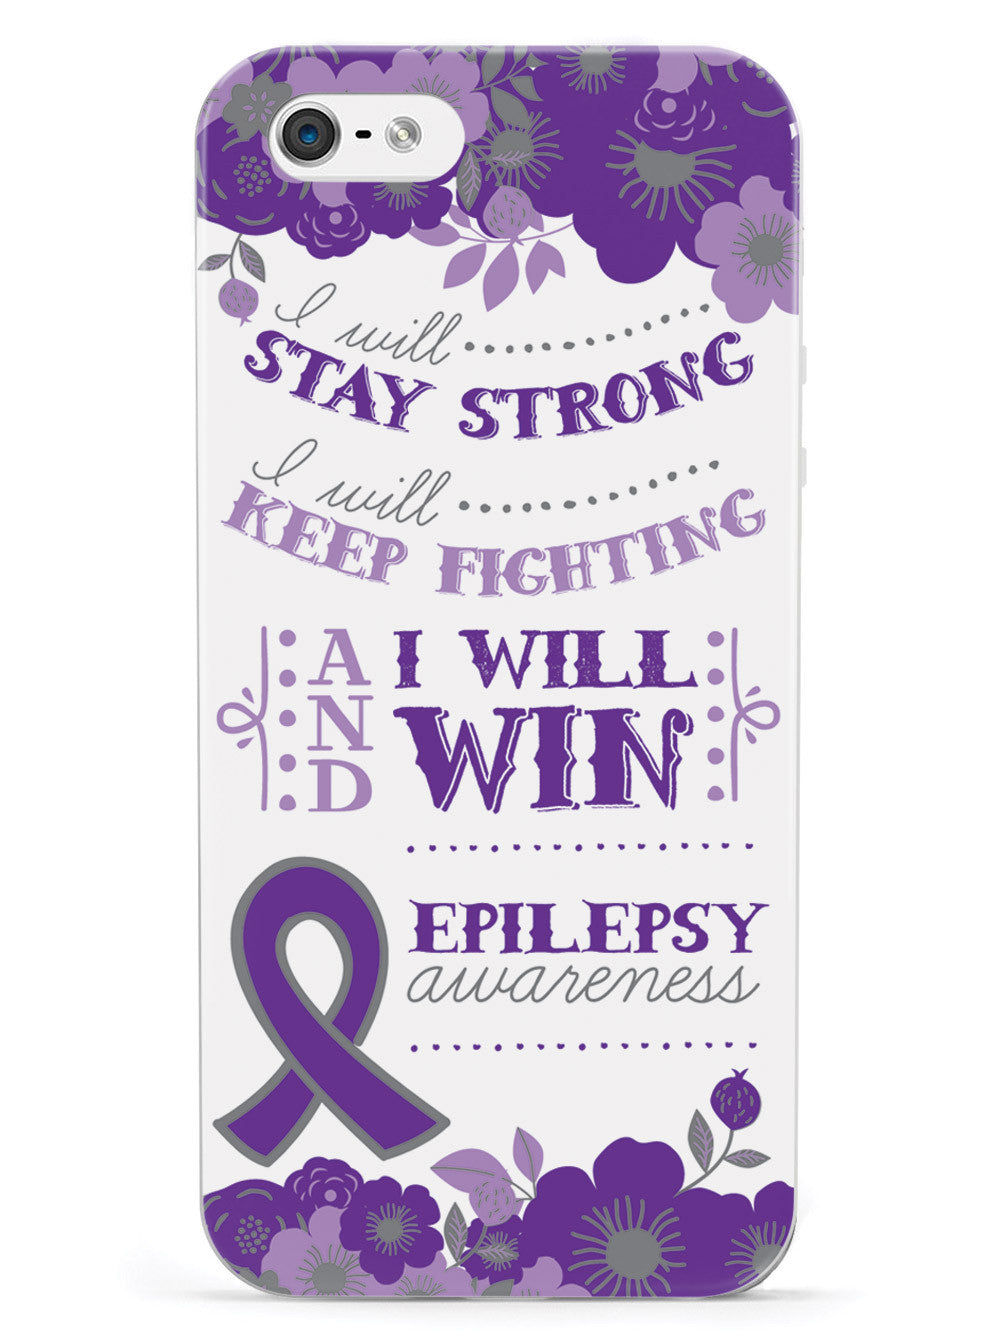 I Will Win - Epilepsy Awareness Case